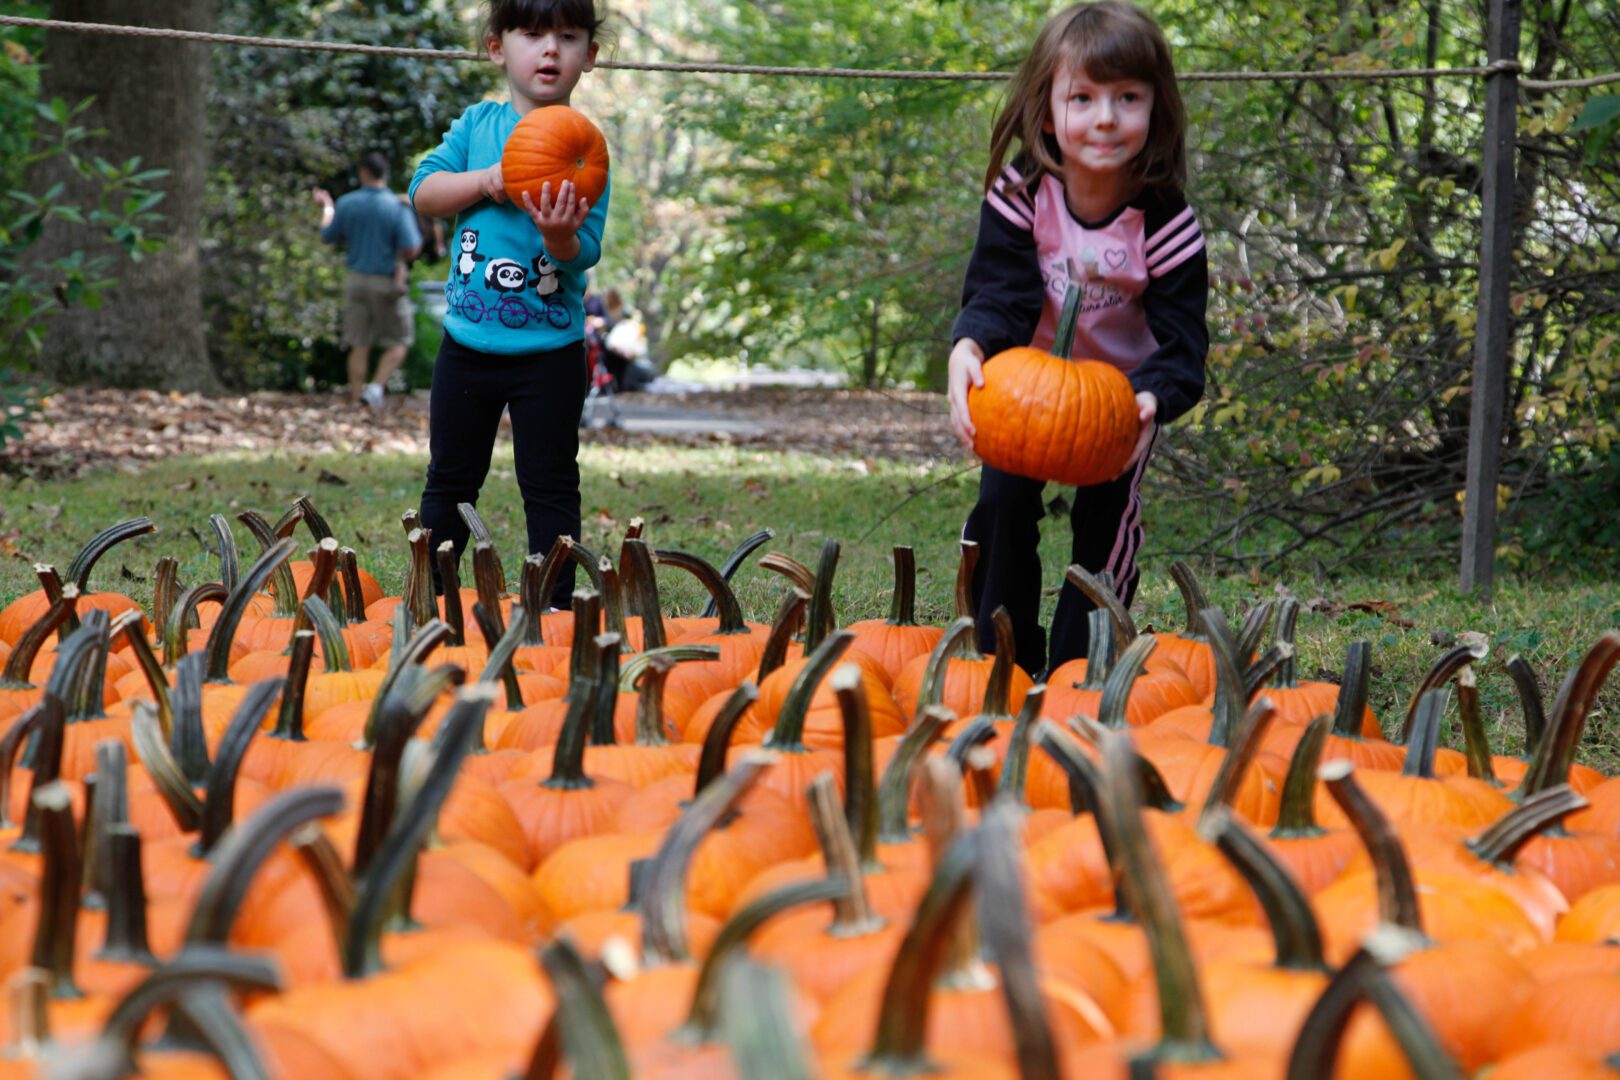 Two children standing in a field of pumpkins.